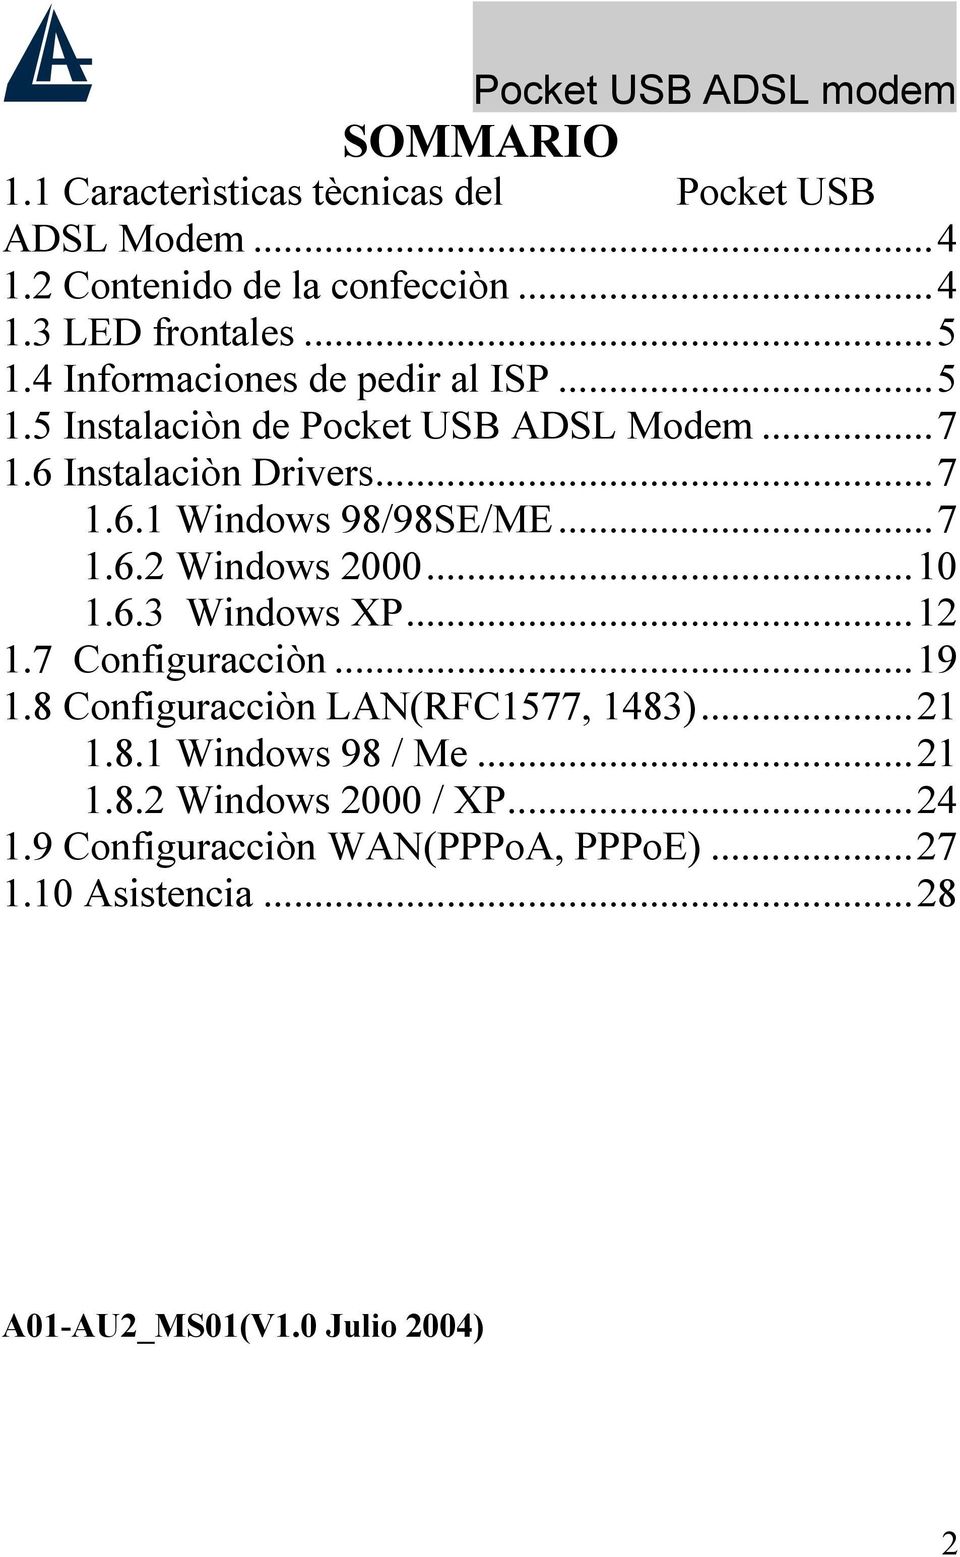 ..7 1.6.2 Windows 2000...10 1.6.3 Windows XP...12 1.7 Configuracciòn...19 1.8 Configuracciòn LAN(RFC1577, 1483)...21 1.8.1 Windows 98 / Me.